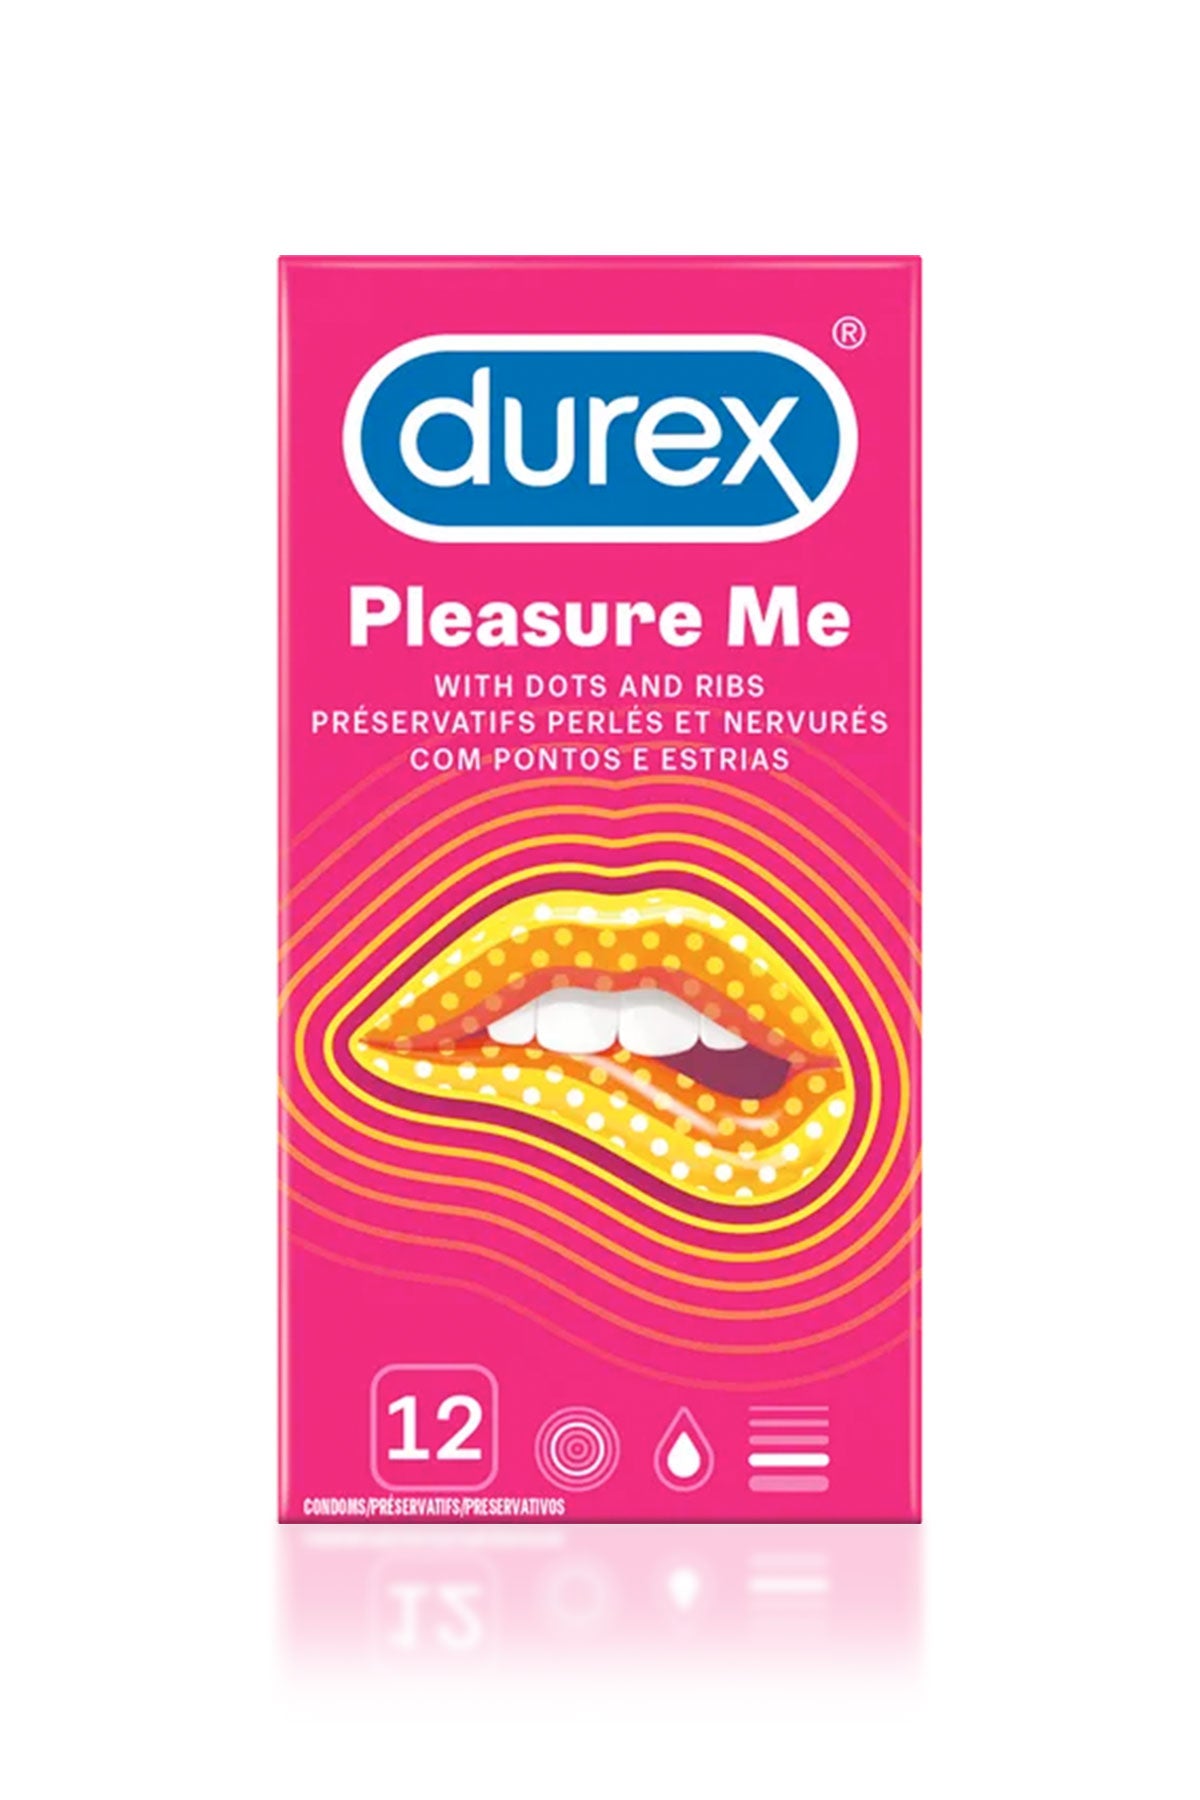 PleasureMe Studded Condoms by Durex